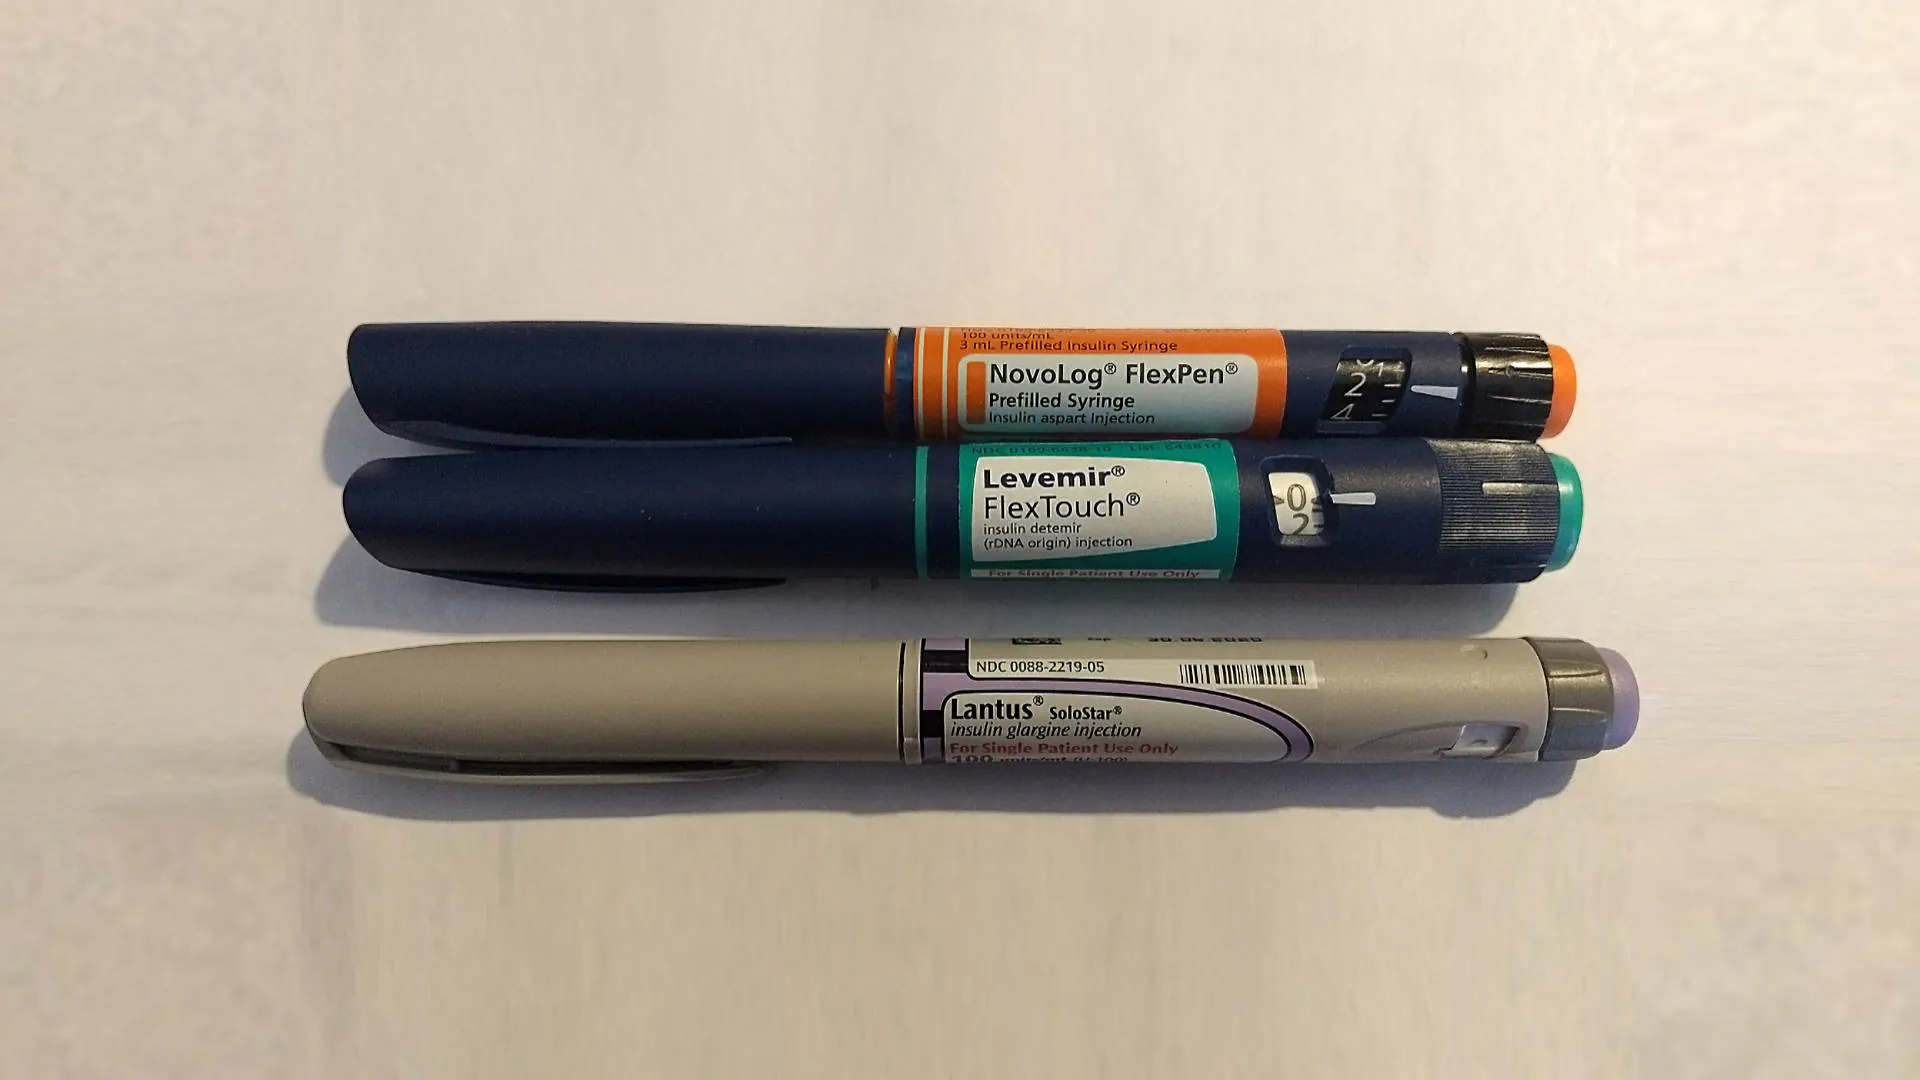 Lantus SoloStar insulin injection pen, NovoLog FlexPen insulin injection pen, and Levemir FlexTouch insulin injection pen